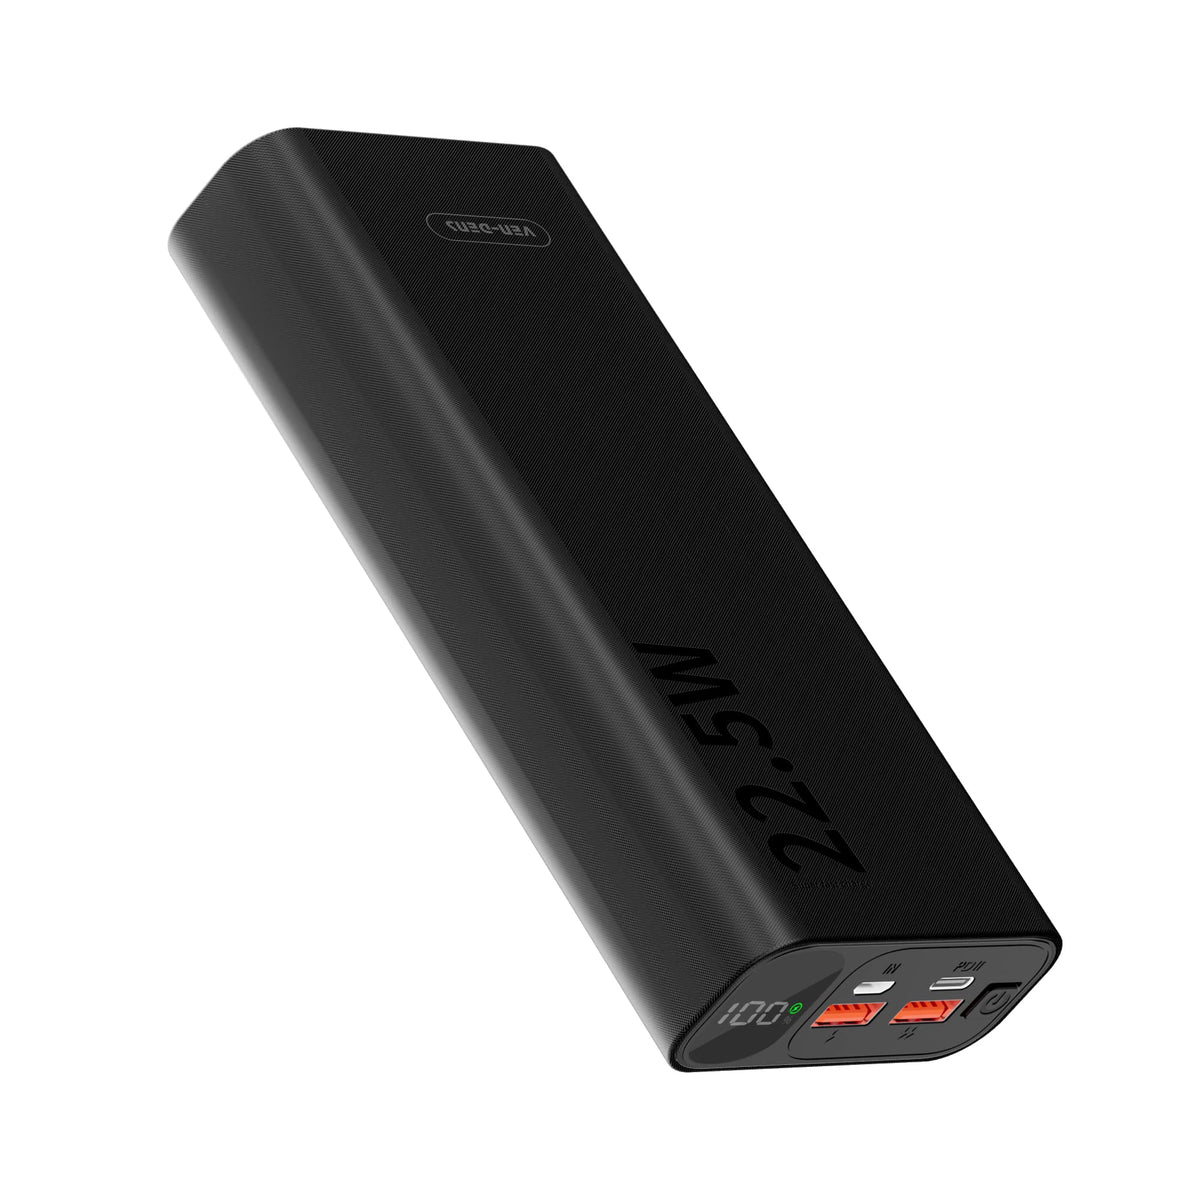 Power bank - Slim Black external battery Ven-Dens dual port USB-USBC 22.5w and 20000 mah